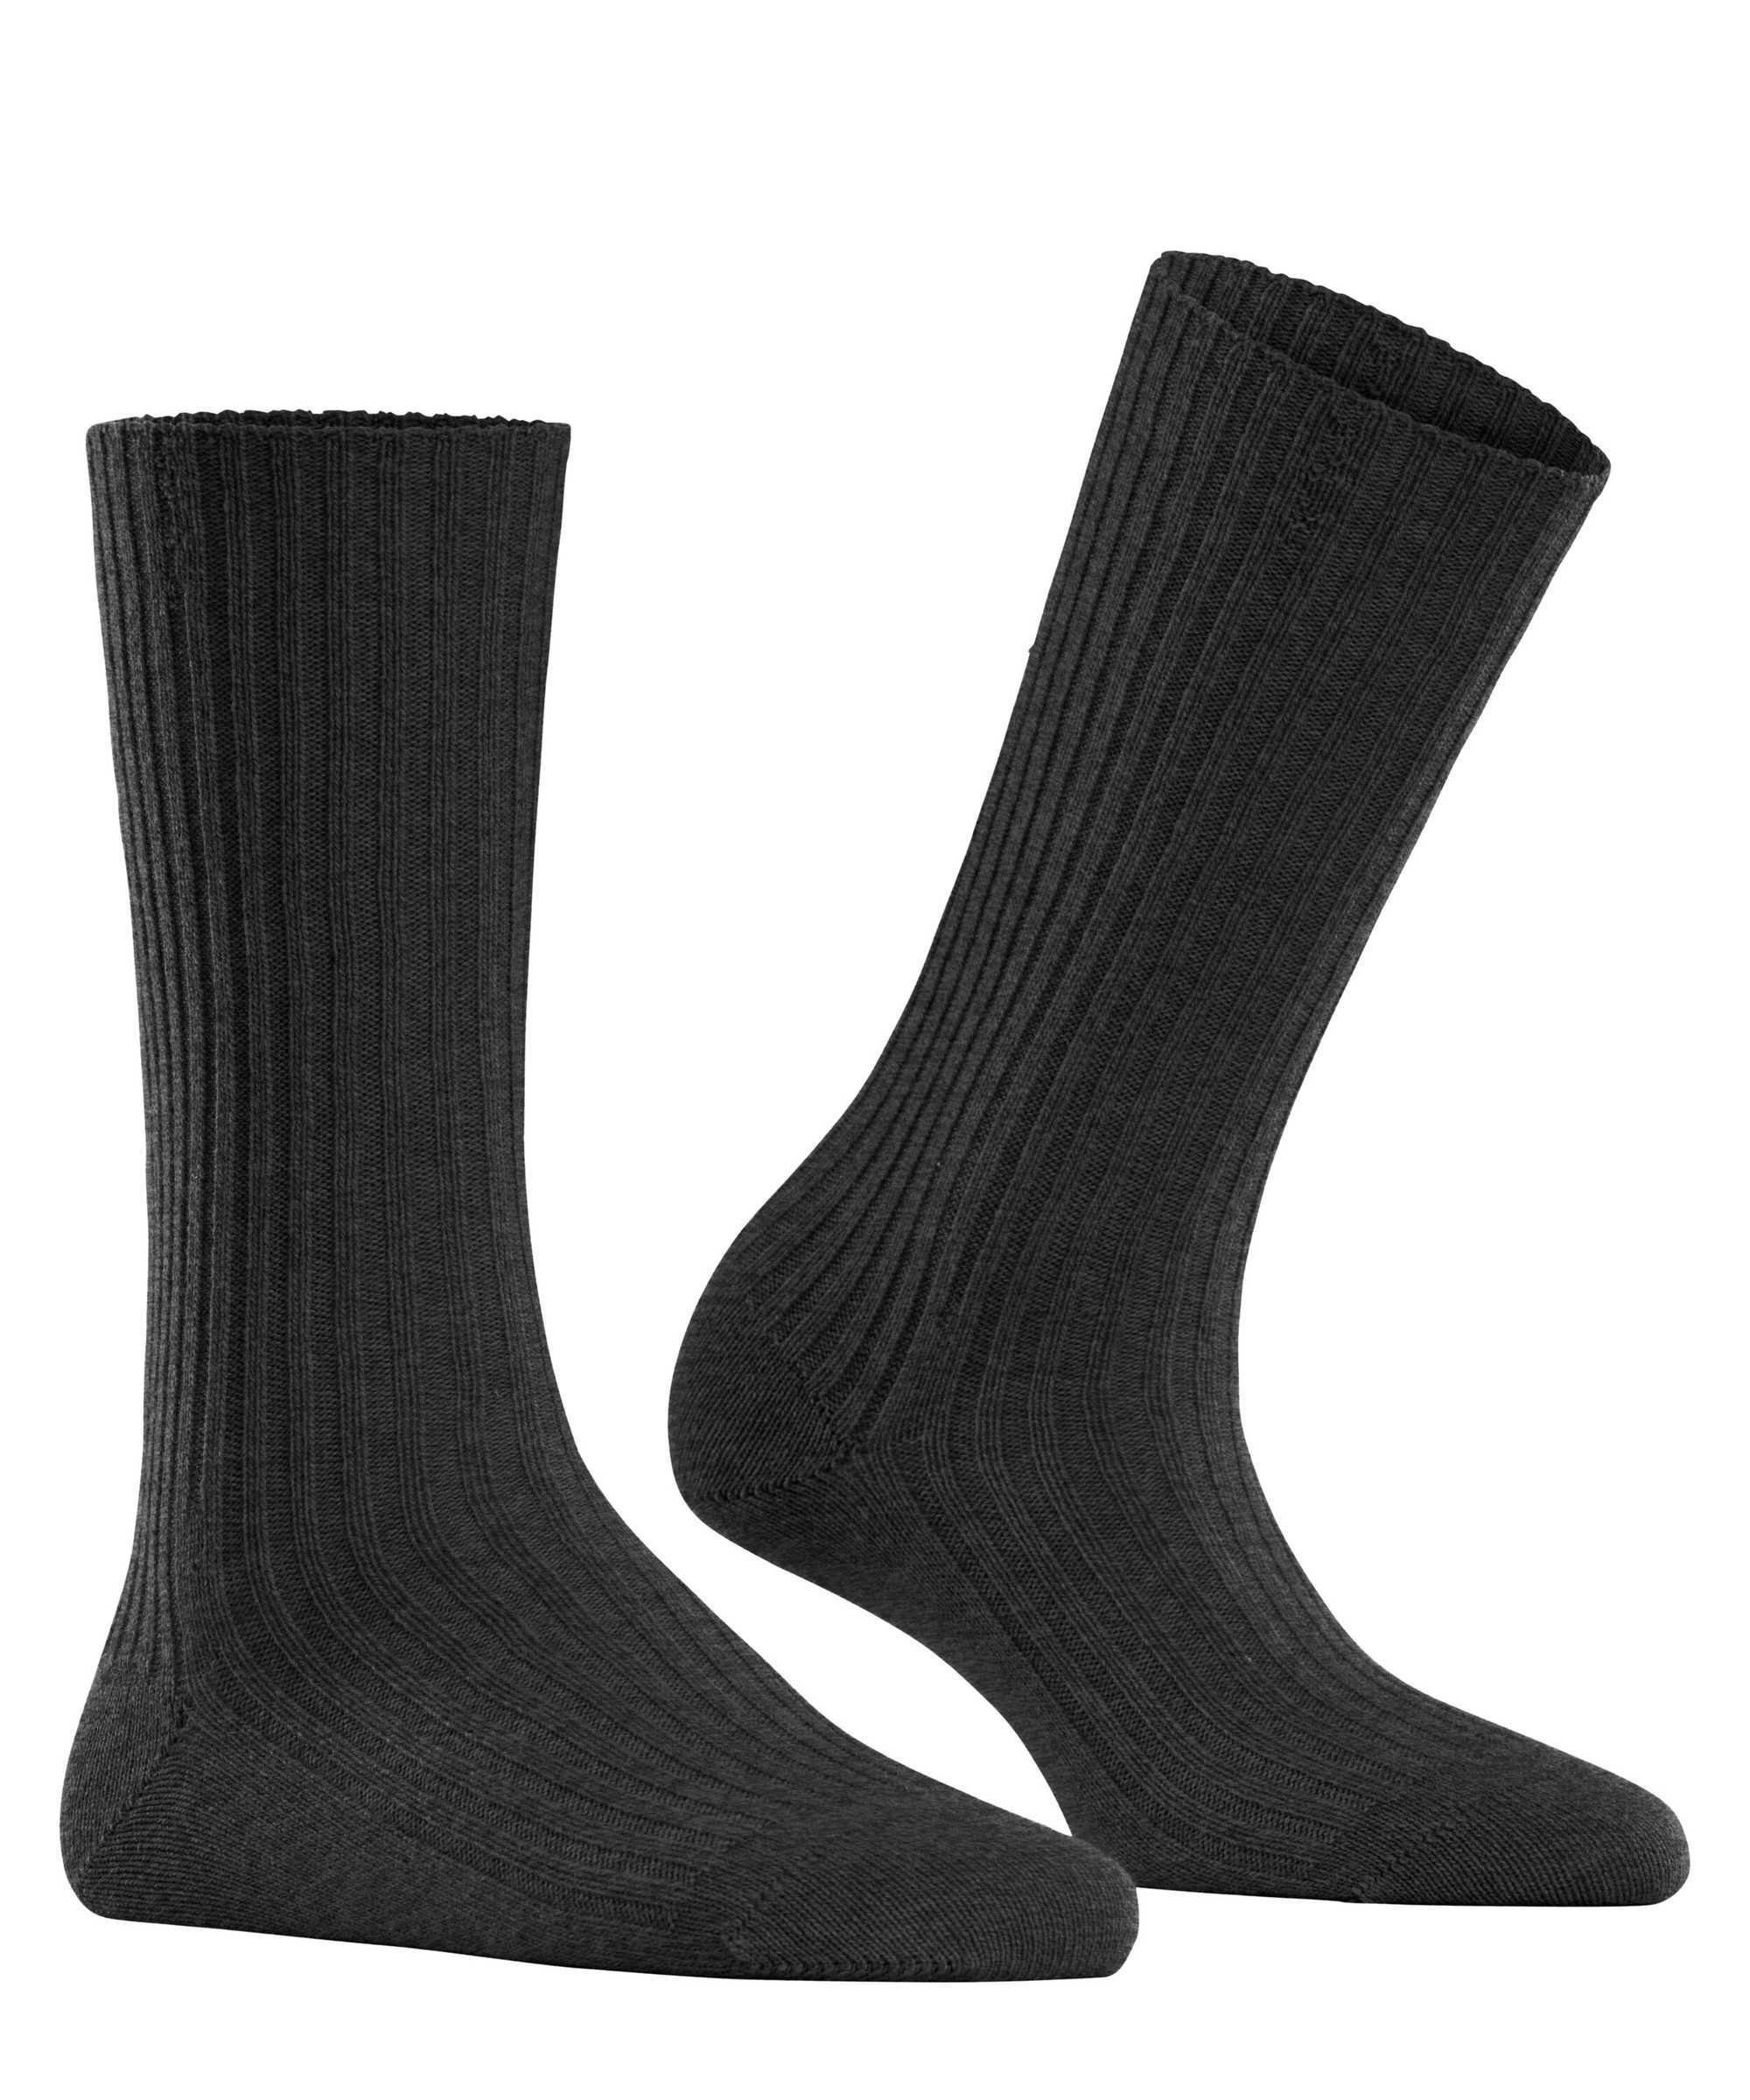 FALKE Wool Kurzsocken Damen Dunkelgrau Socken - Kurzsocken Cosy Boot,